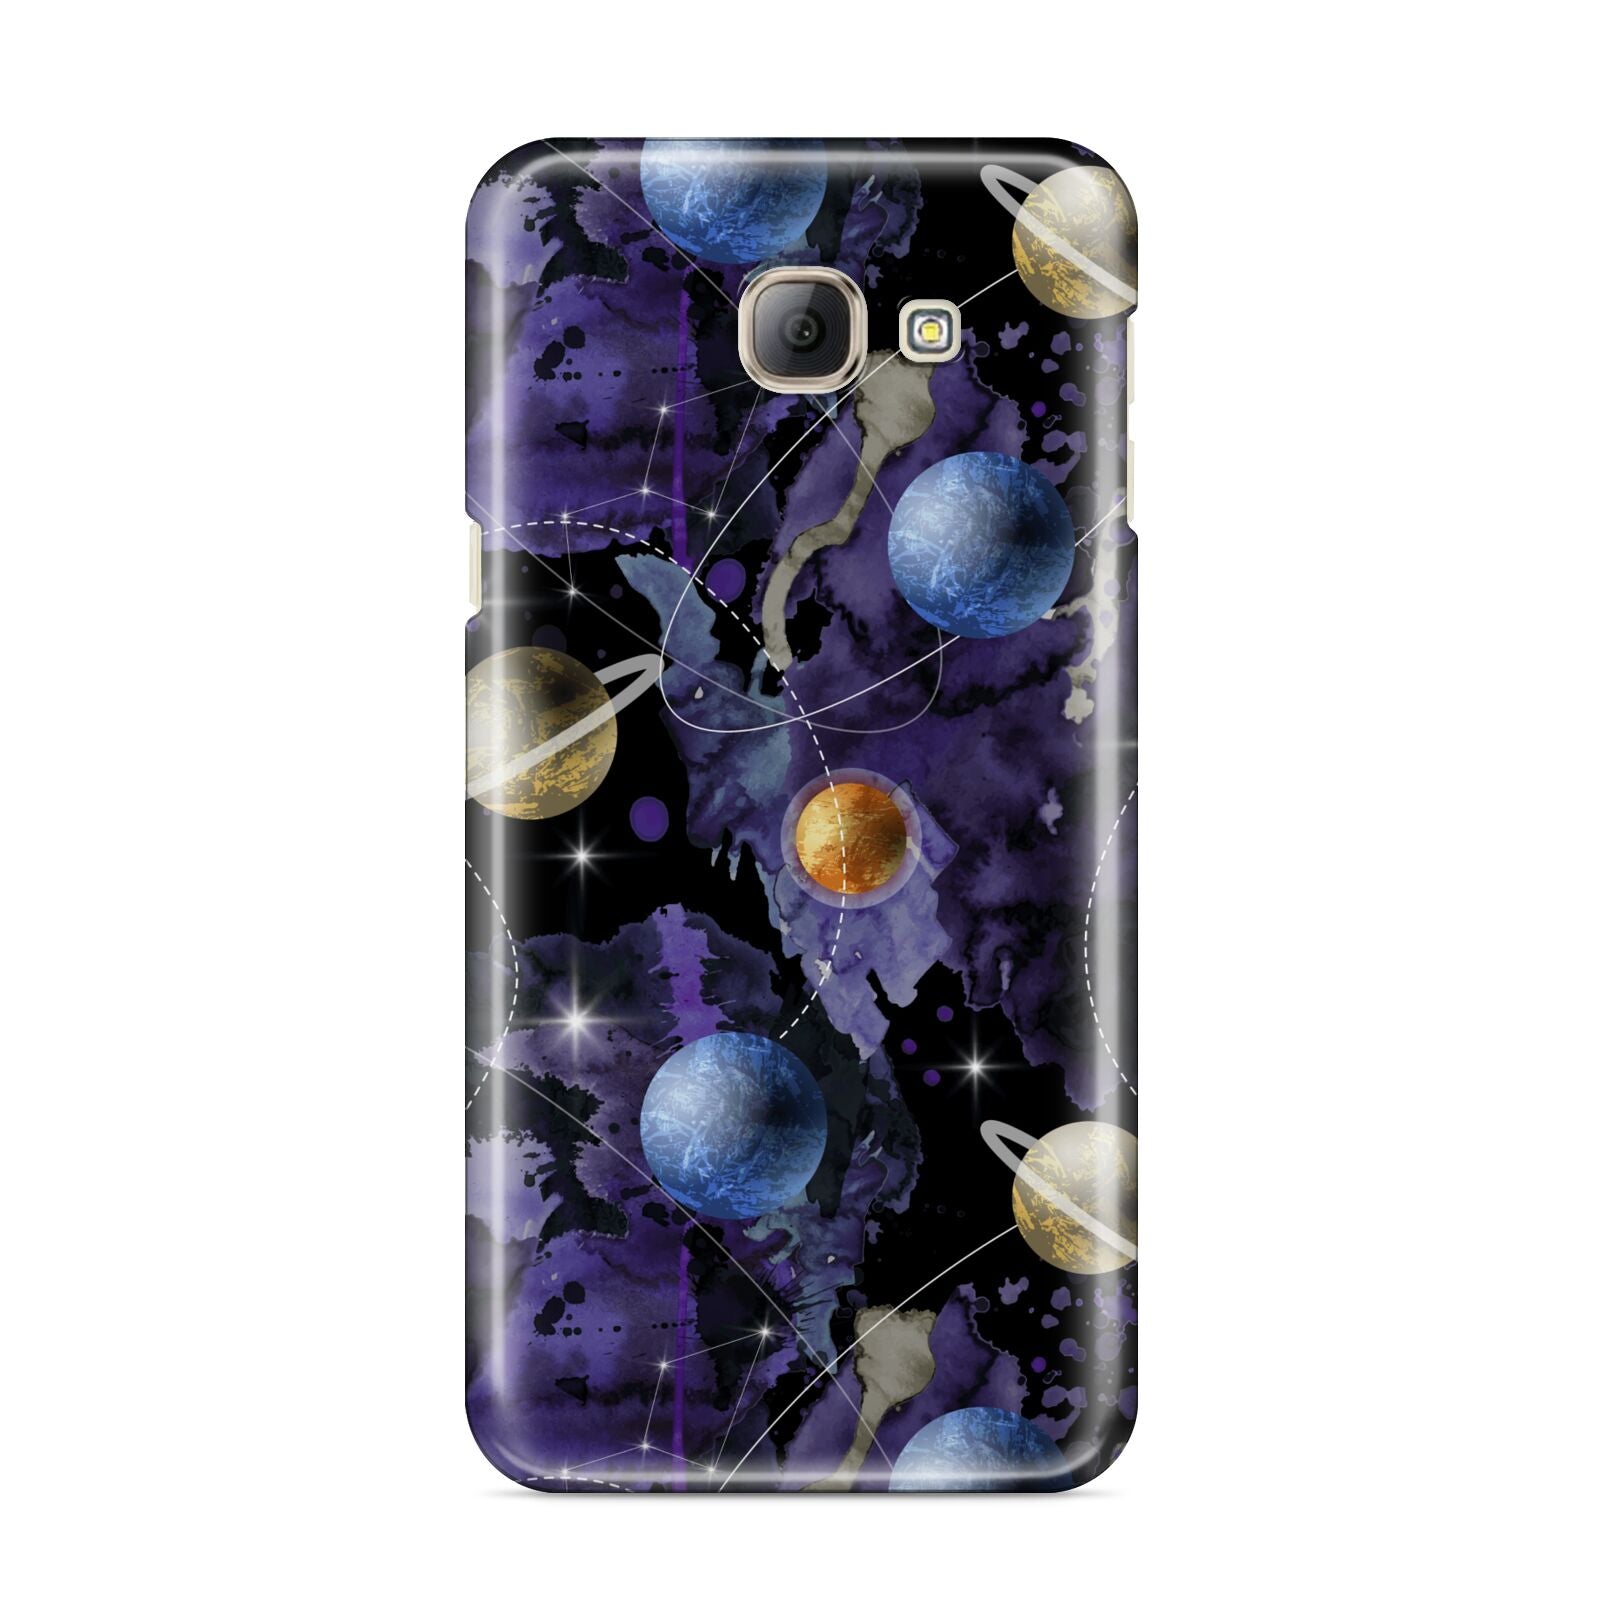 Planet Samsung Galaxy A8 2016 Case